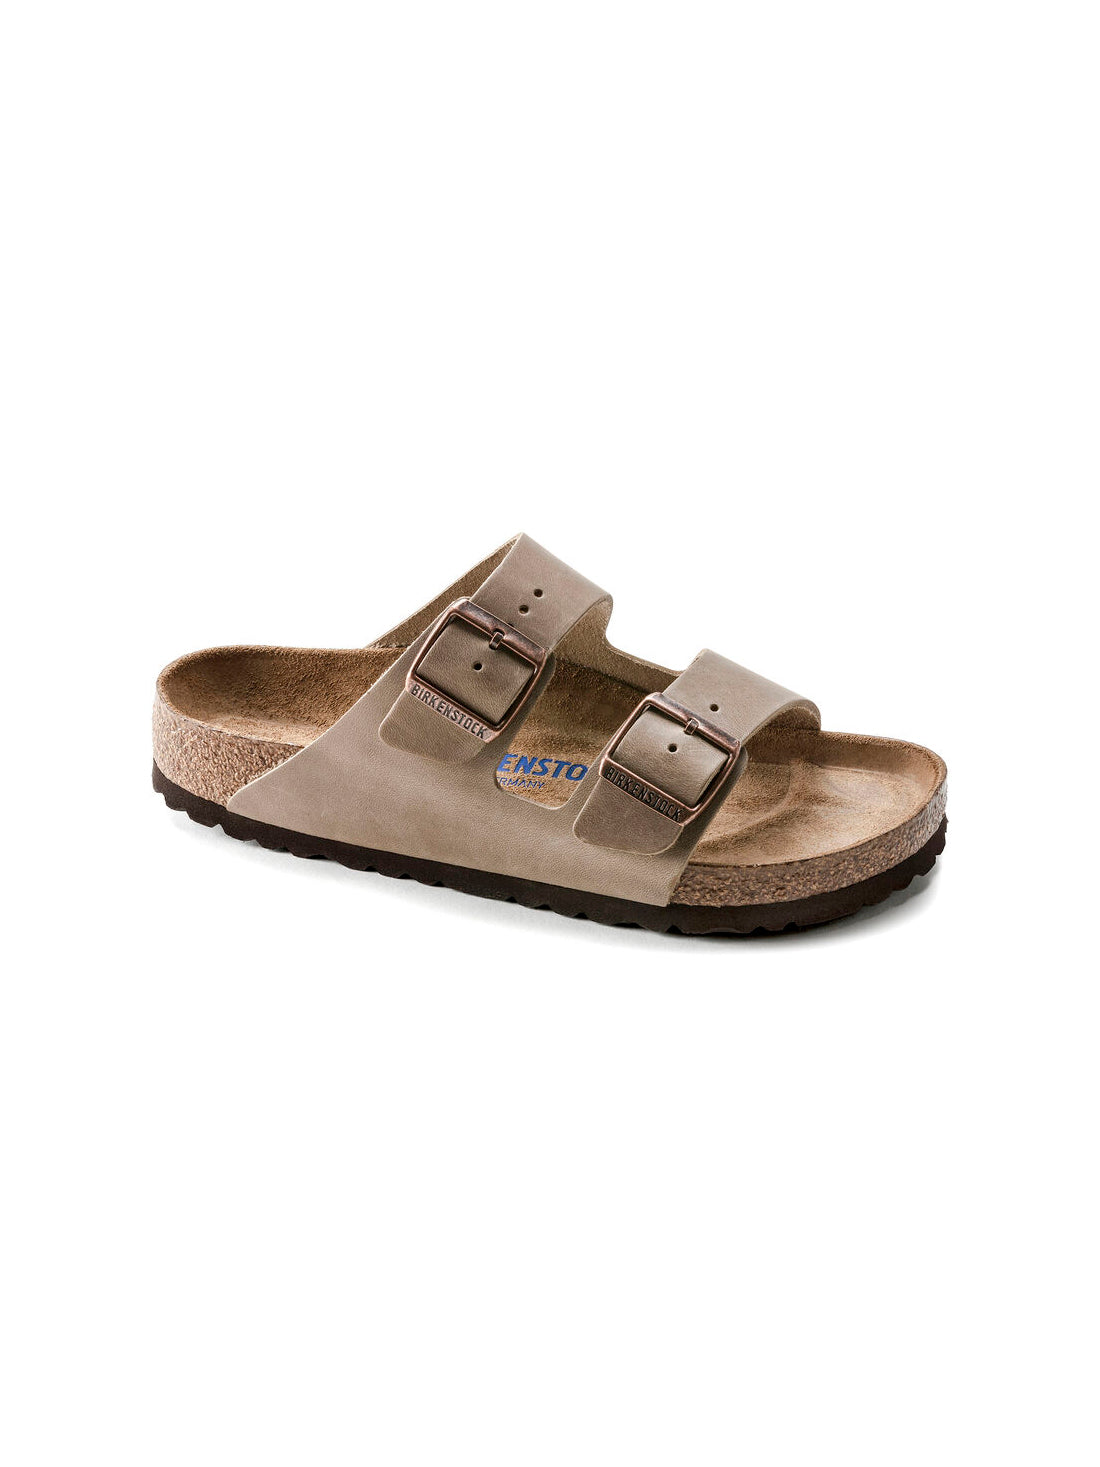 birkenstock arizona soft footbed sandals in oiled leather tobacco brown regular